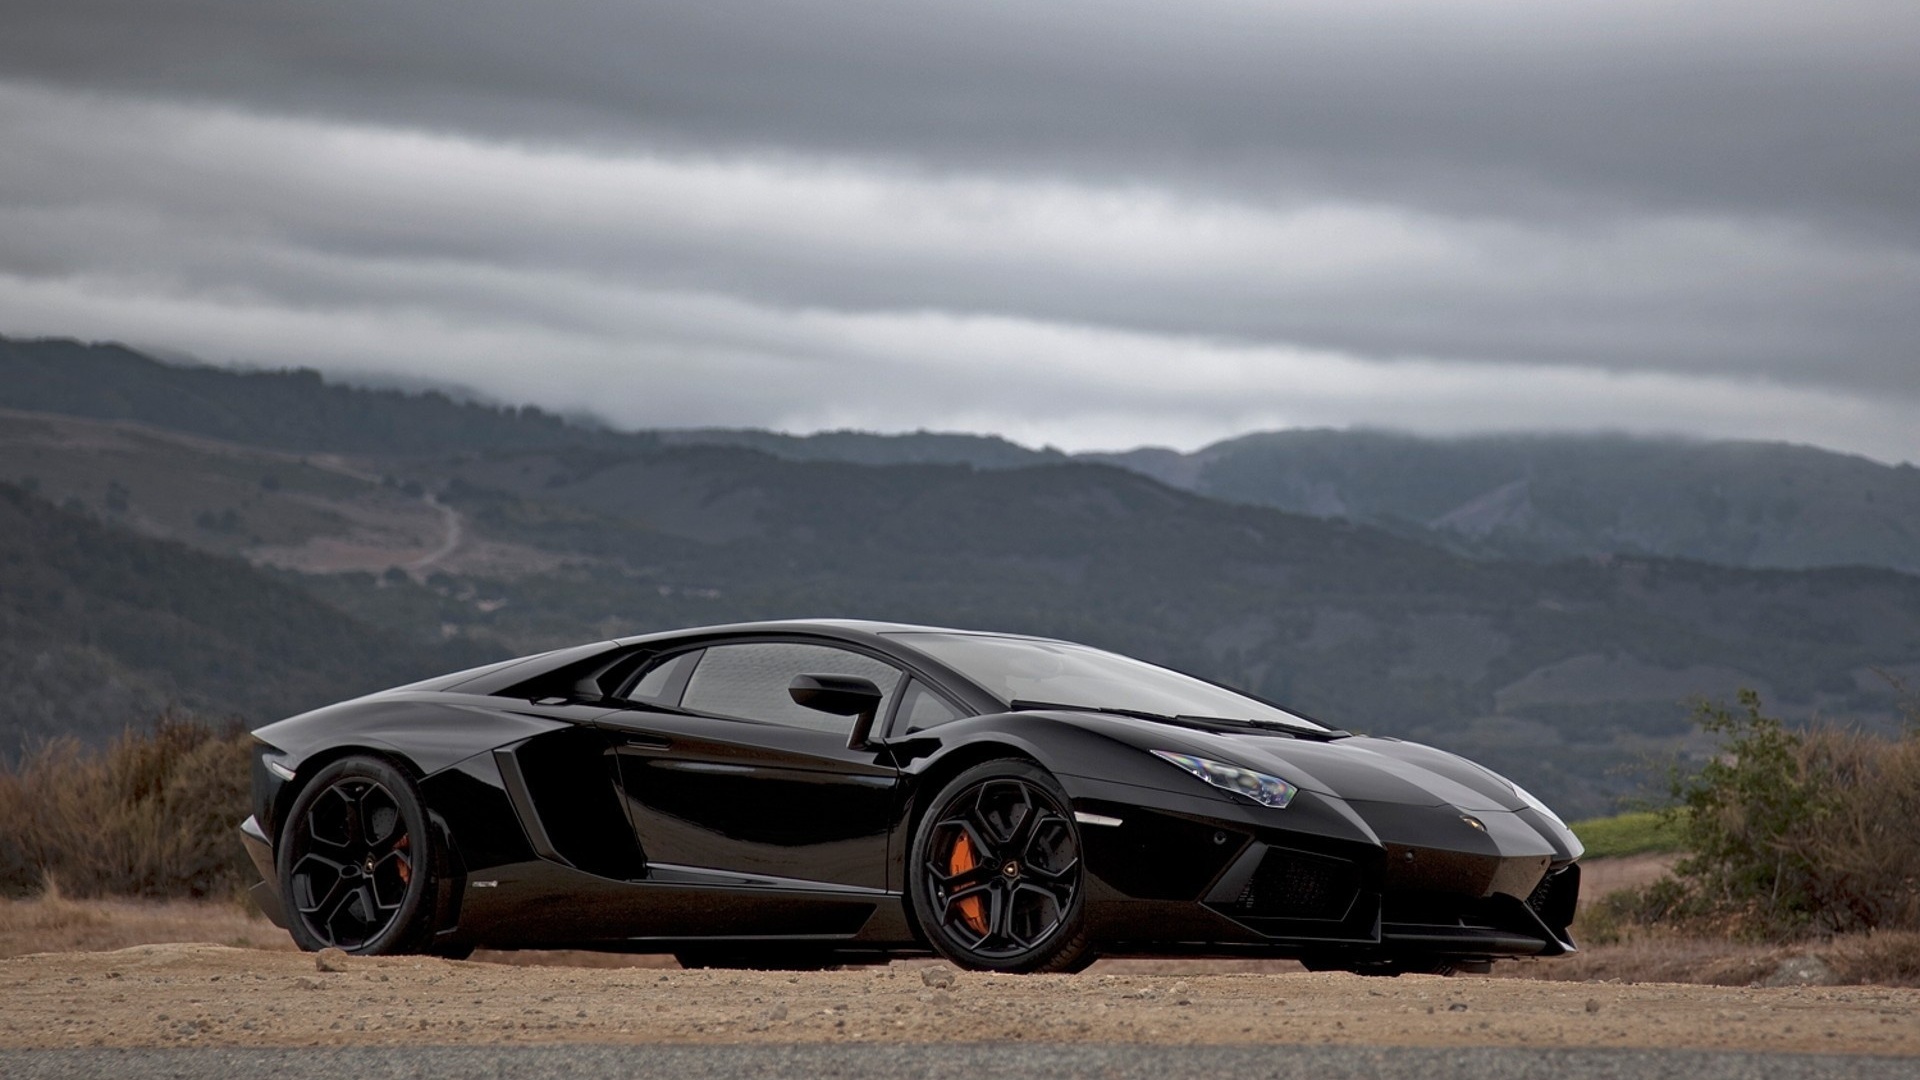 Lamborghini Aventador Black Wallpaper